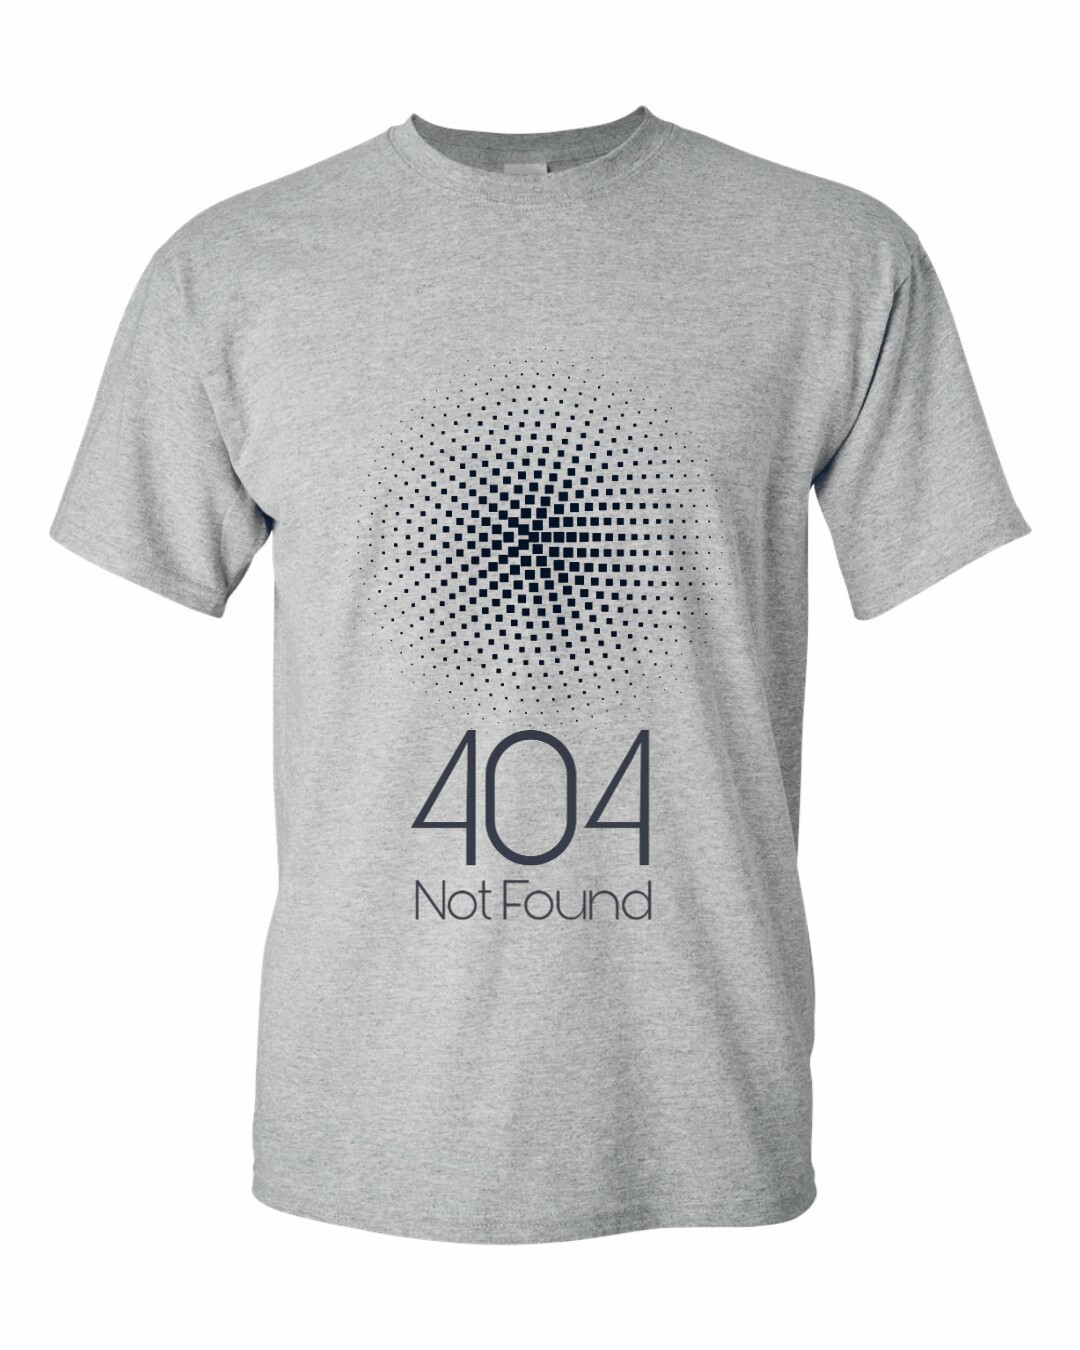 404 not found t-shirt